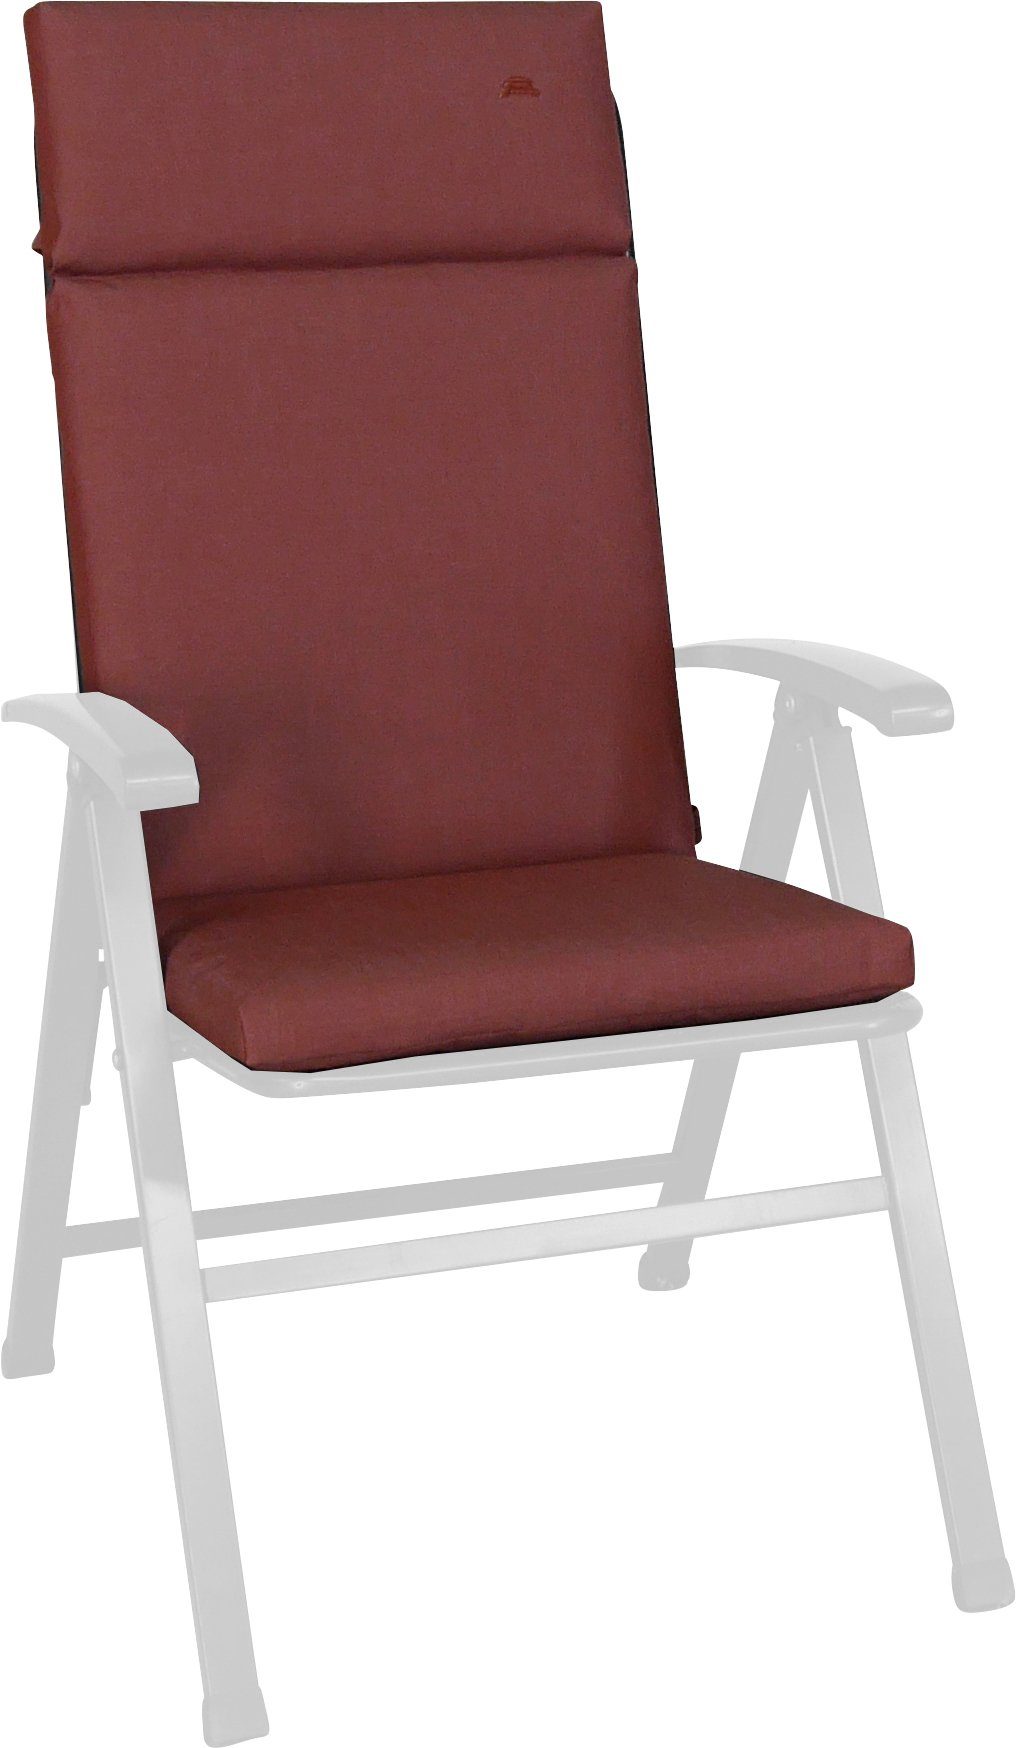 Angerer Freizeitmöbel Sesselauflage Sun, St) terracotta (1